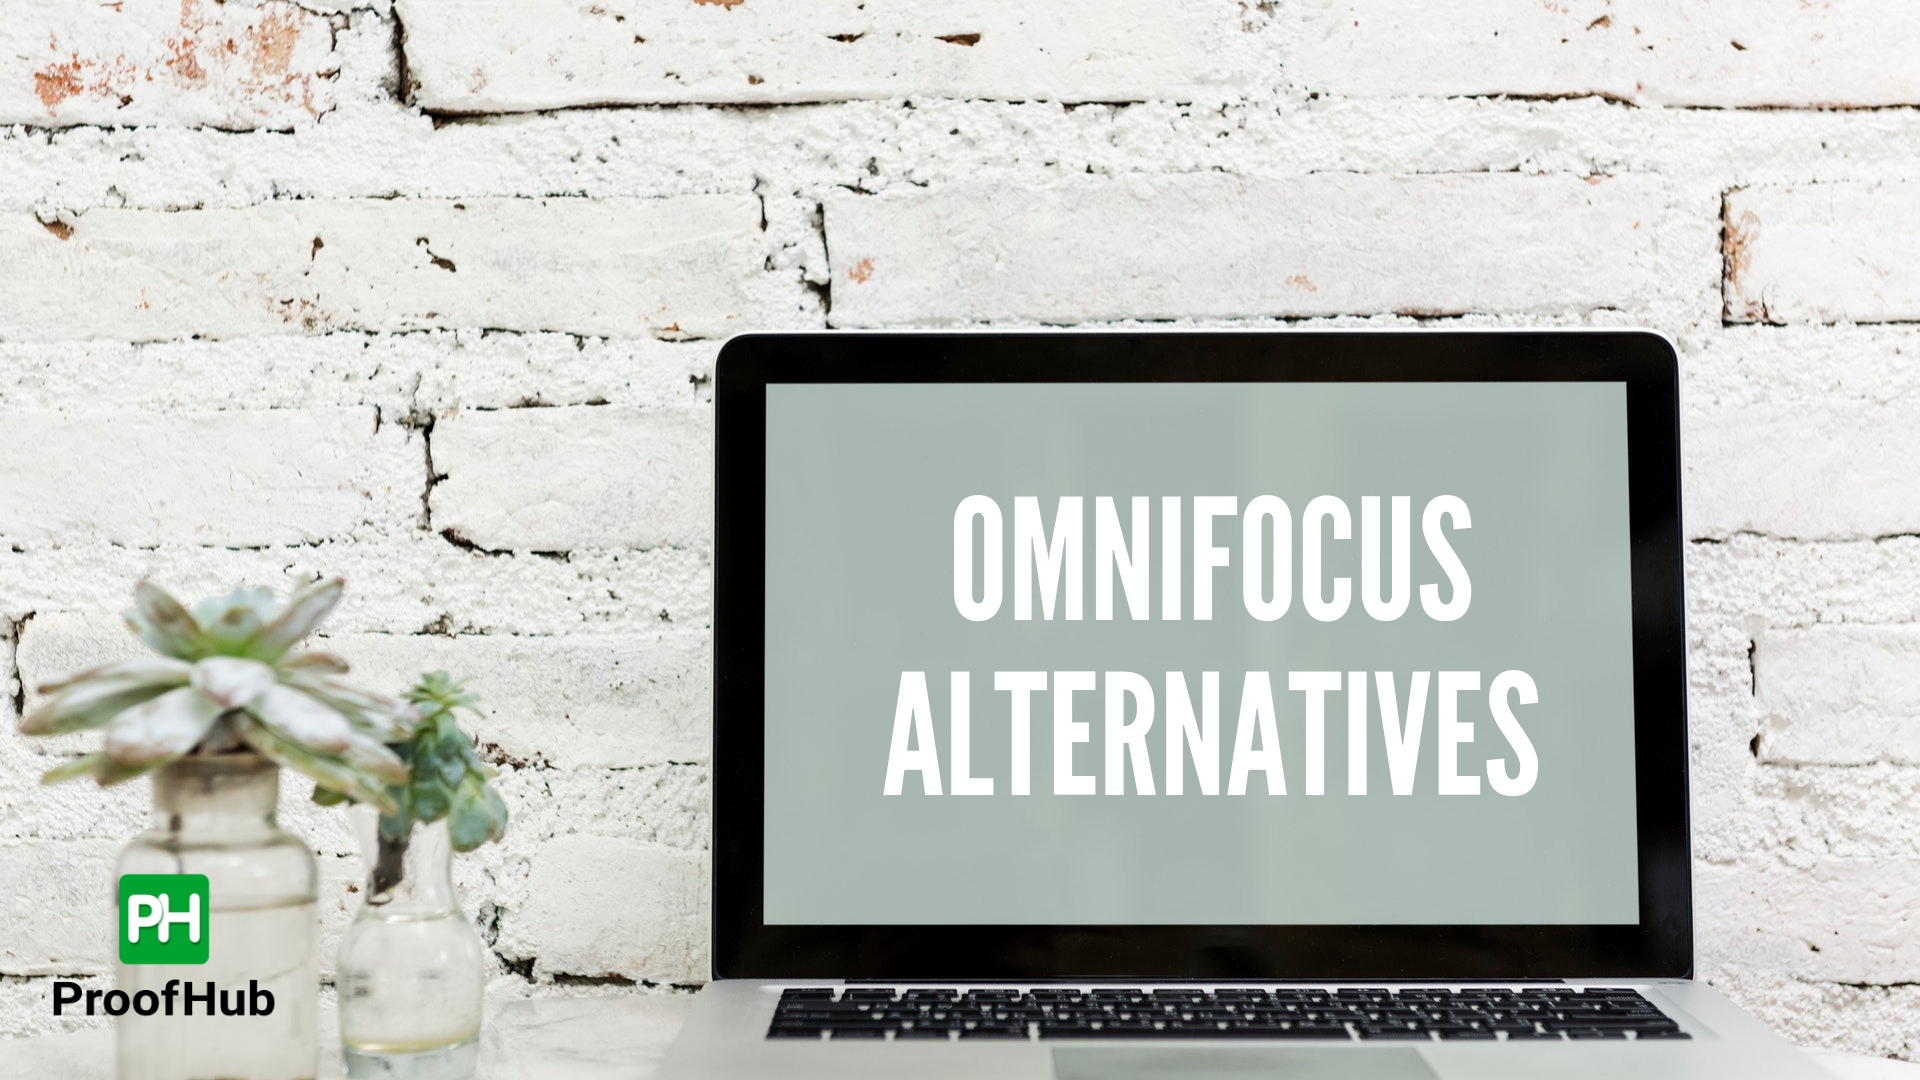 Omnifocus alternatives